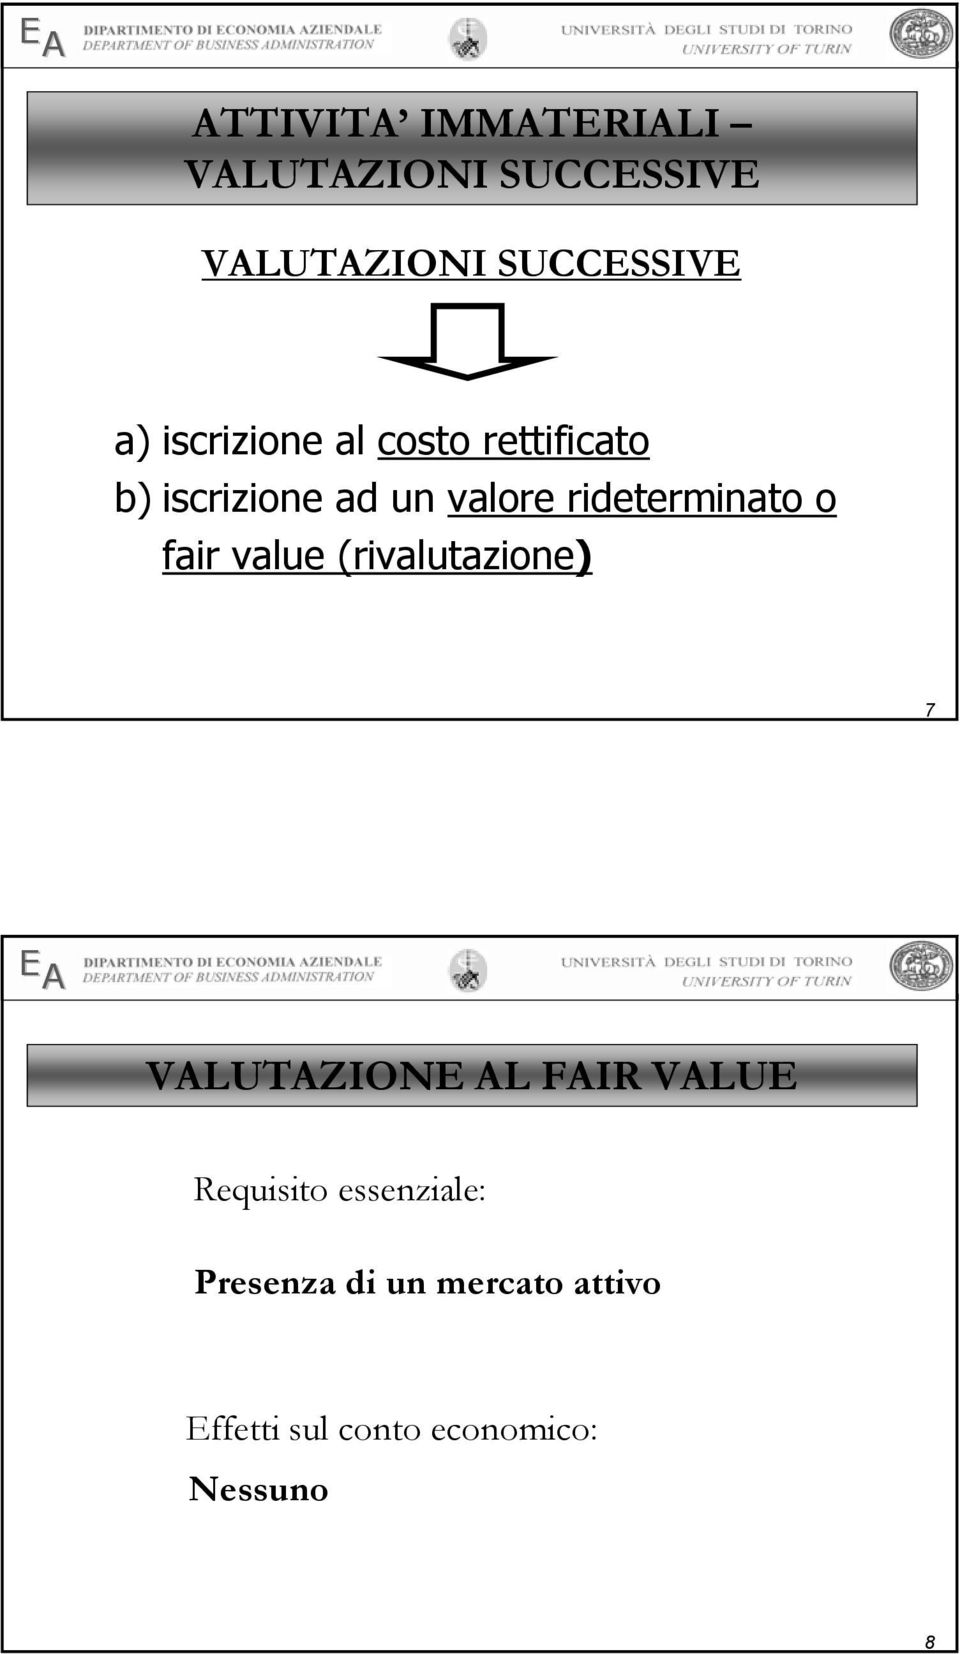 fair value (rivalutazione) 7 VLUTZION L FIR VLU Requisito